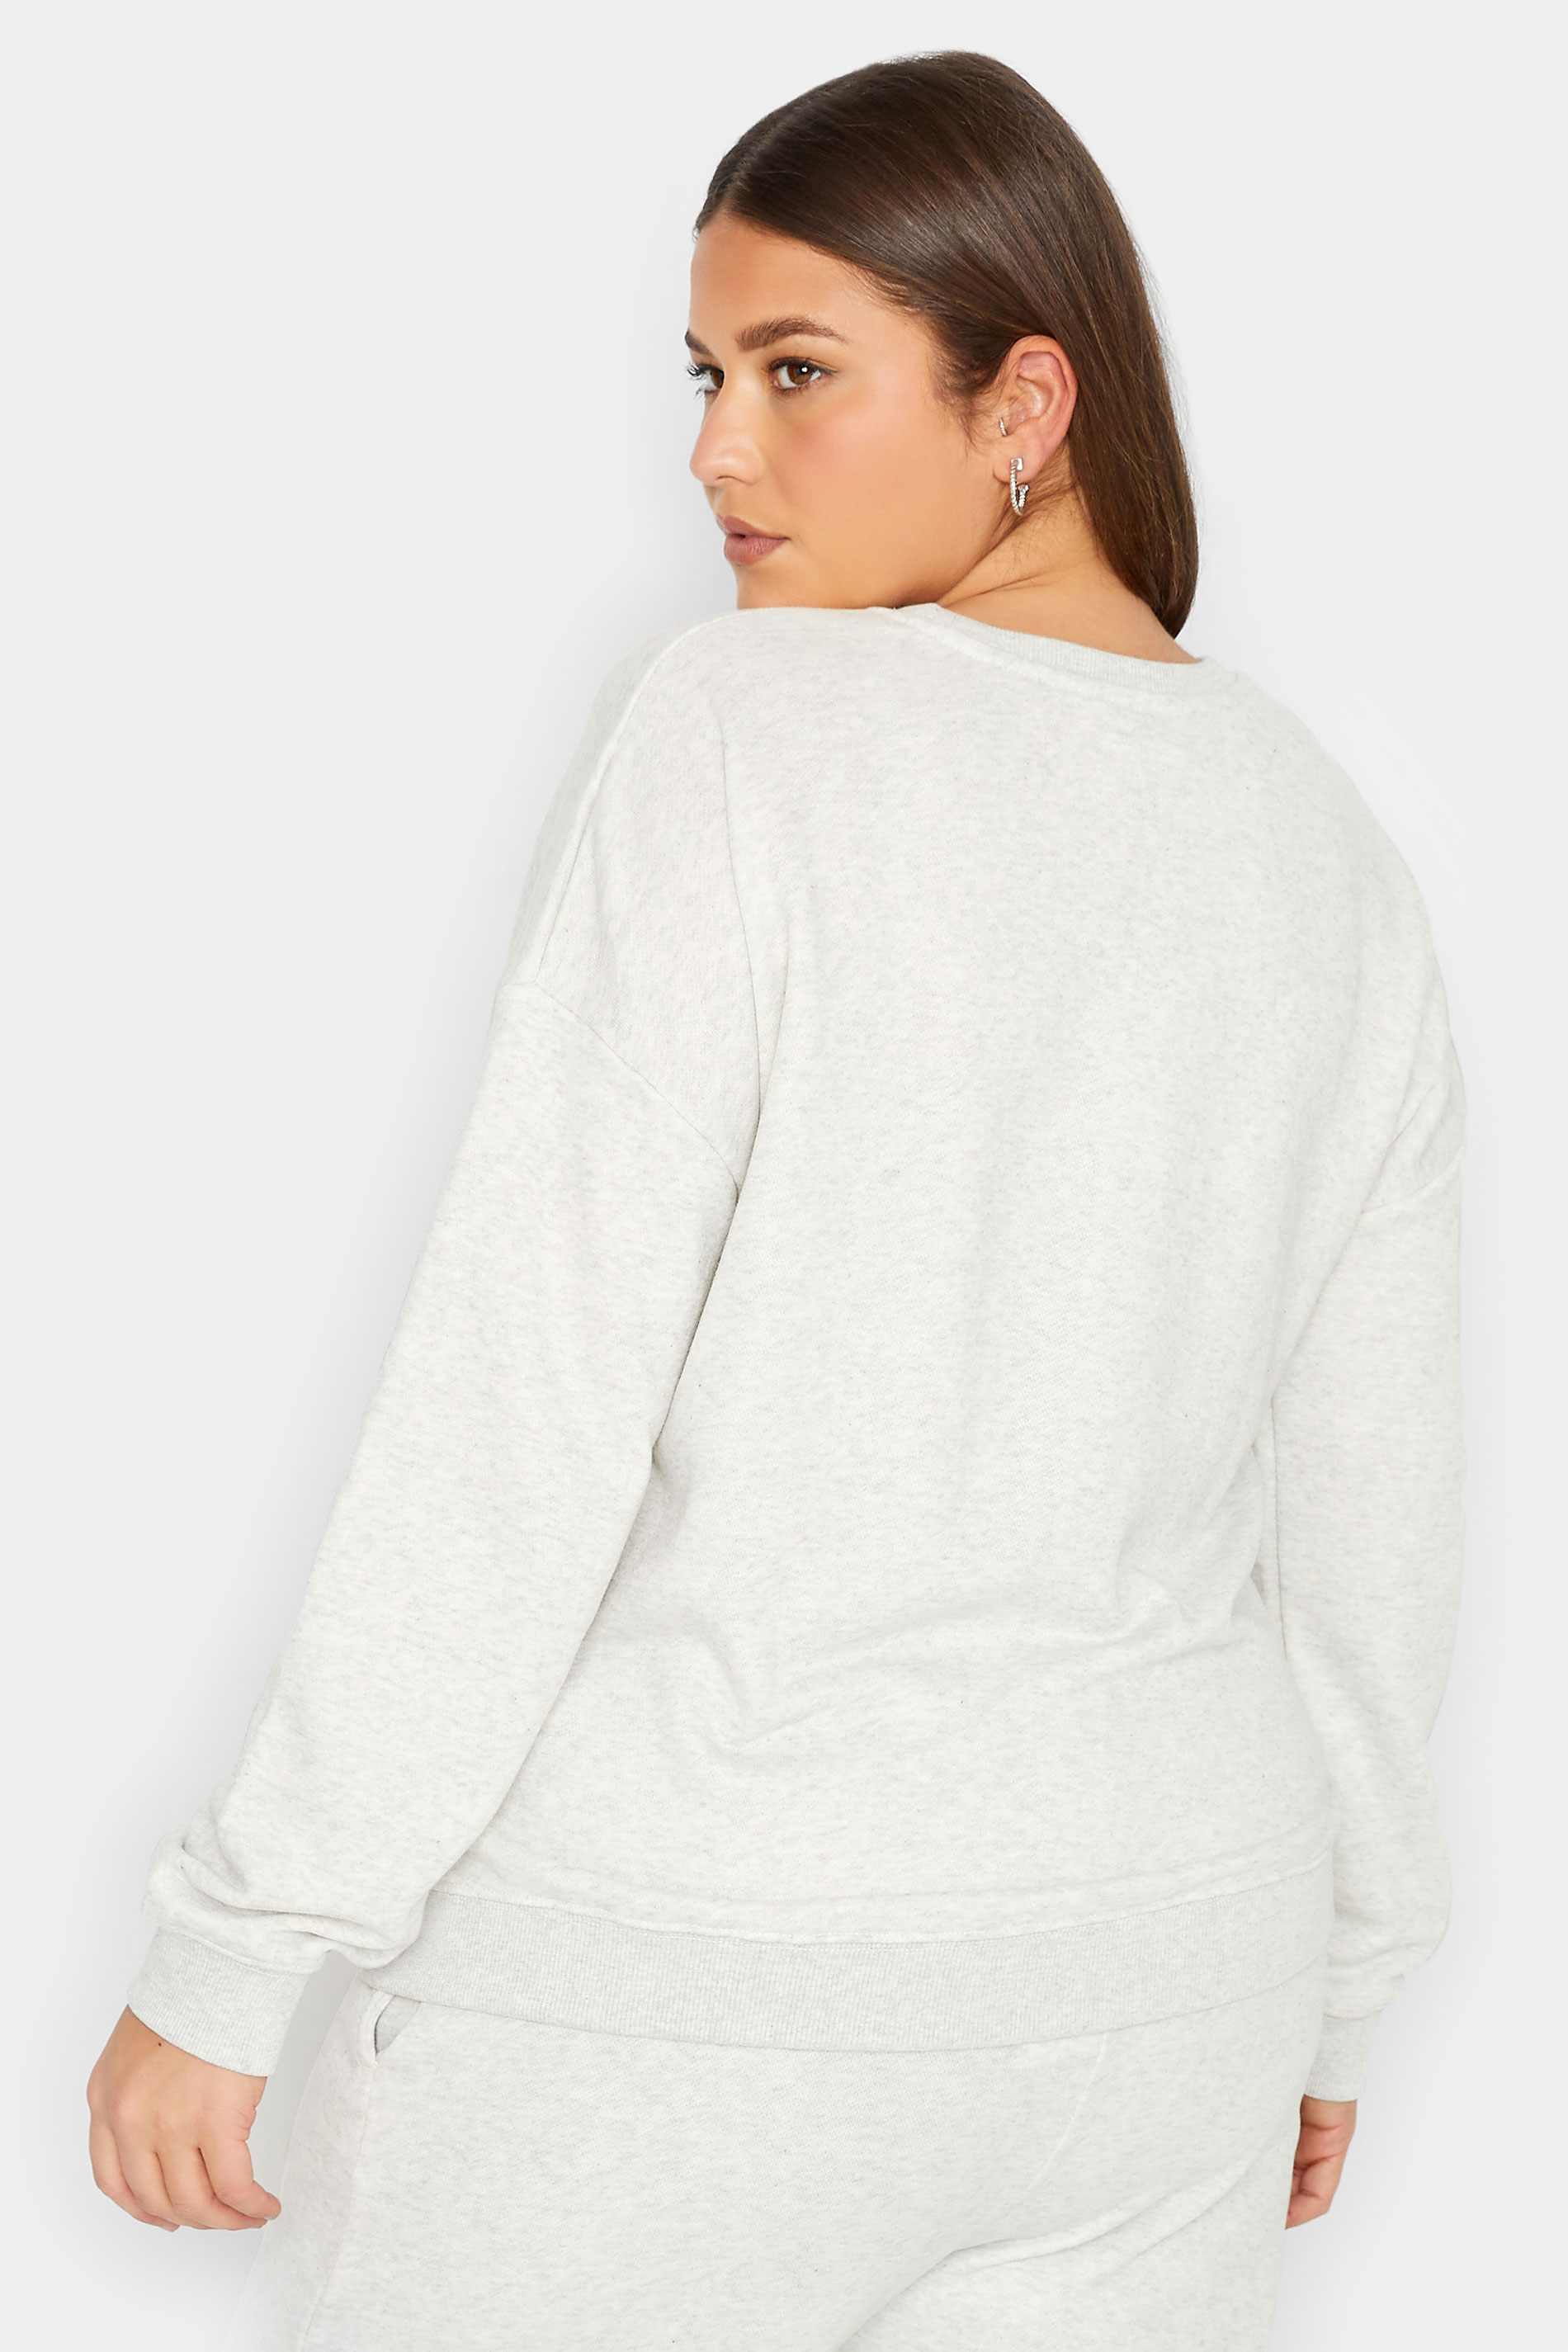 LTS Tall Light Grey Long Sleeve Sweatshirt | Long Tall Sally  3